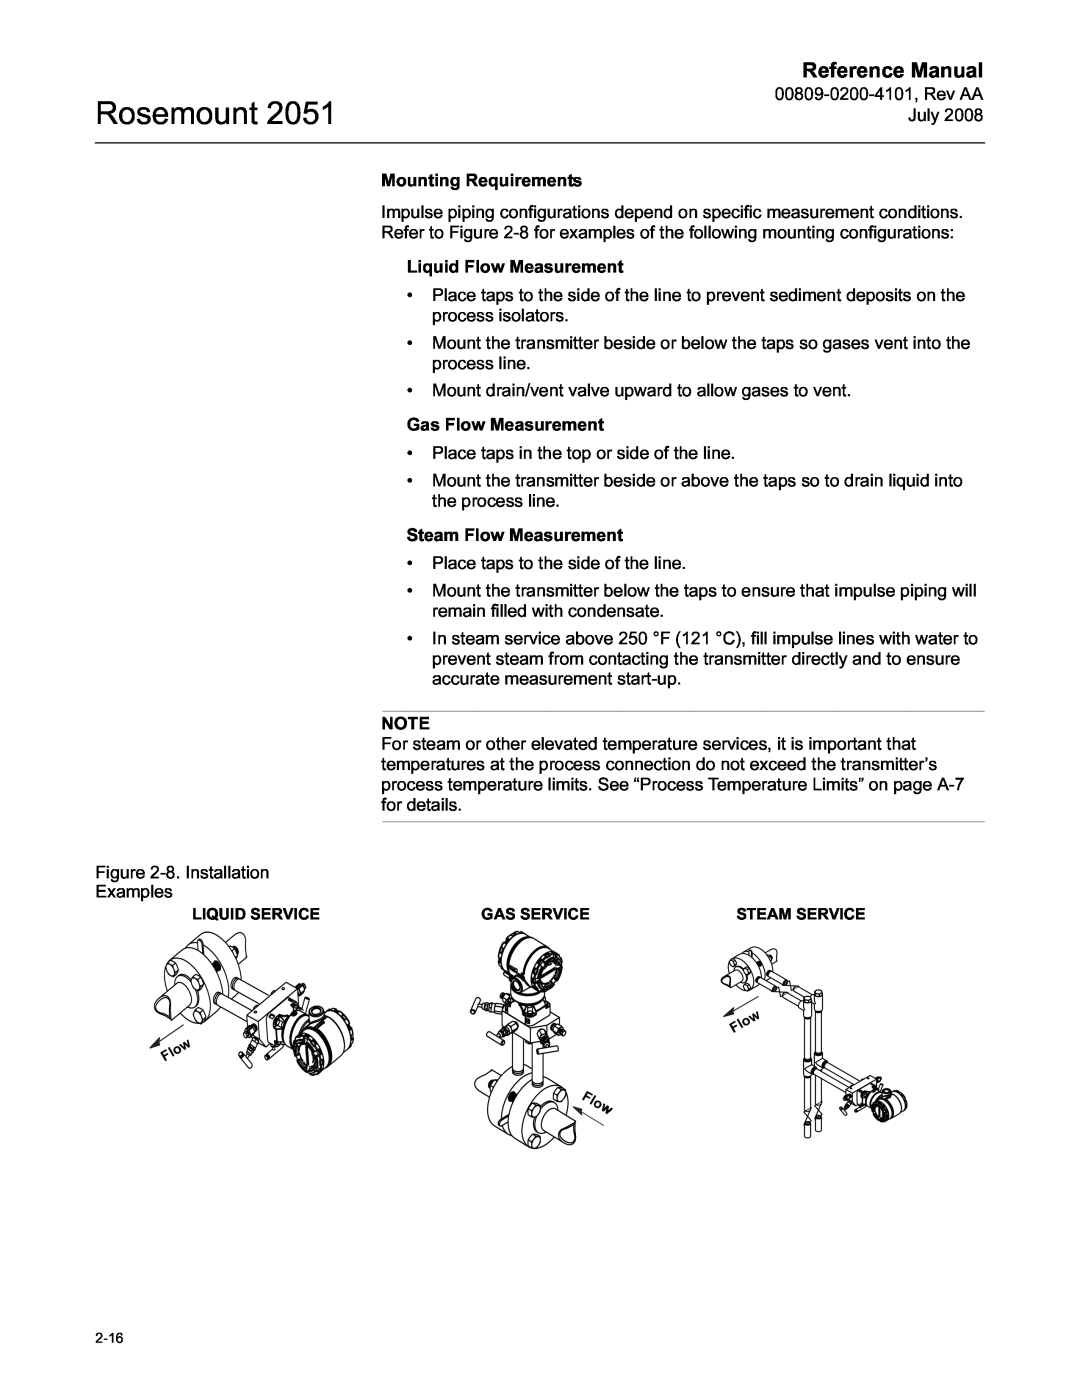 Emerson Process Management 2051 manual Rosemount, Reference Manual, Flow 